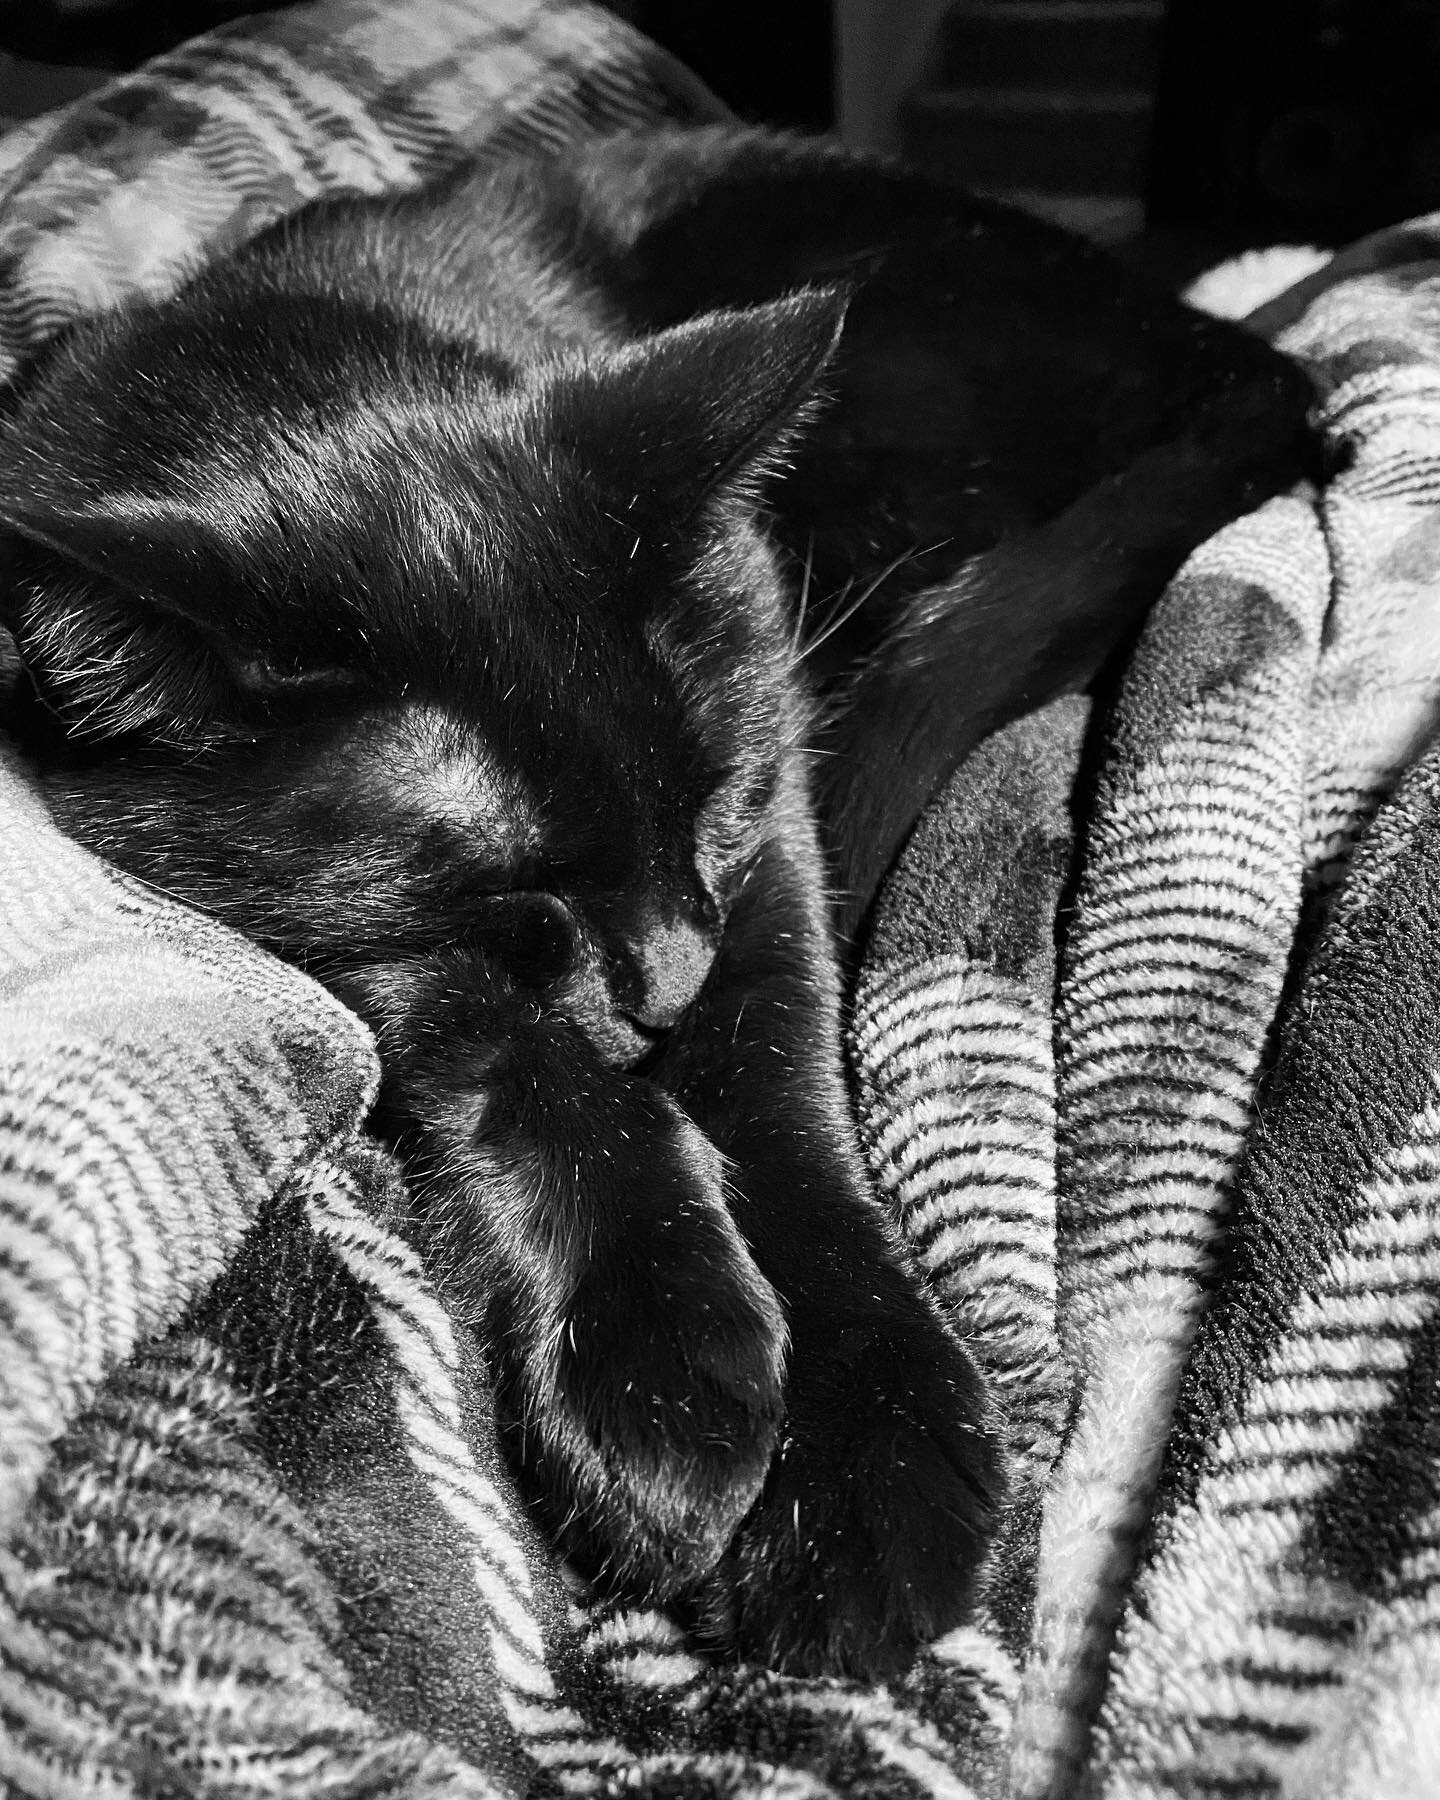 My cuddly and contemplative Oliver.
.
.
.
#catsofinstagram #blackcat #mondaymood